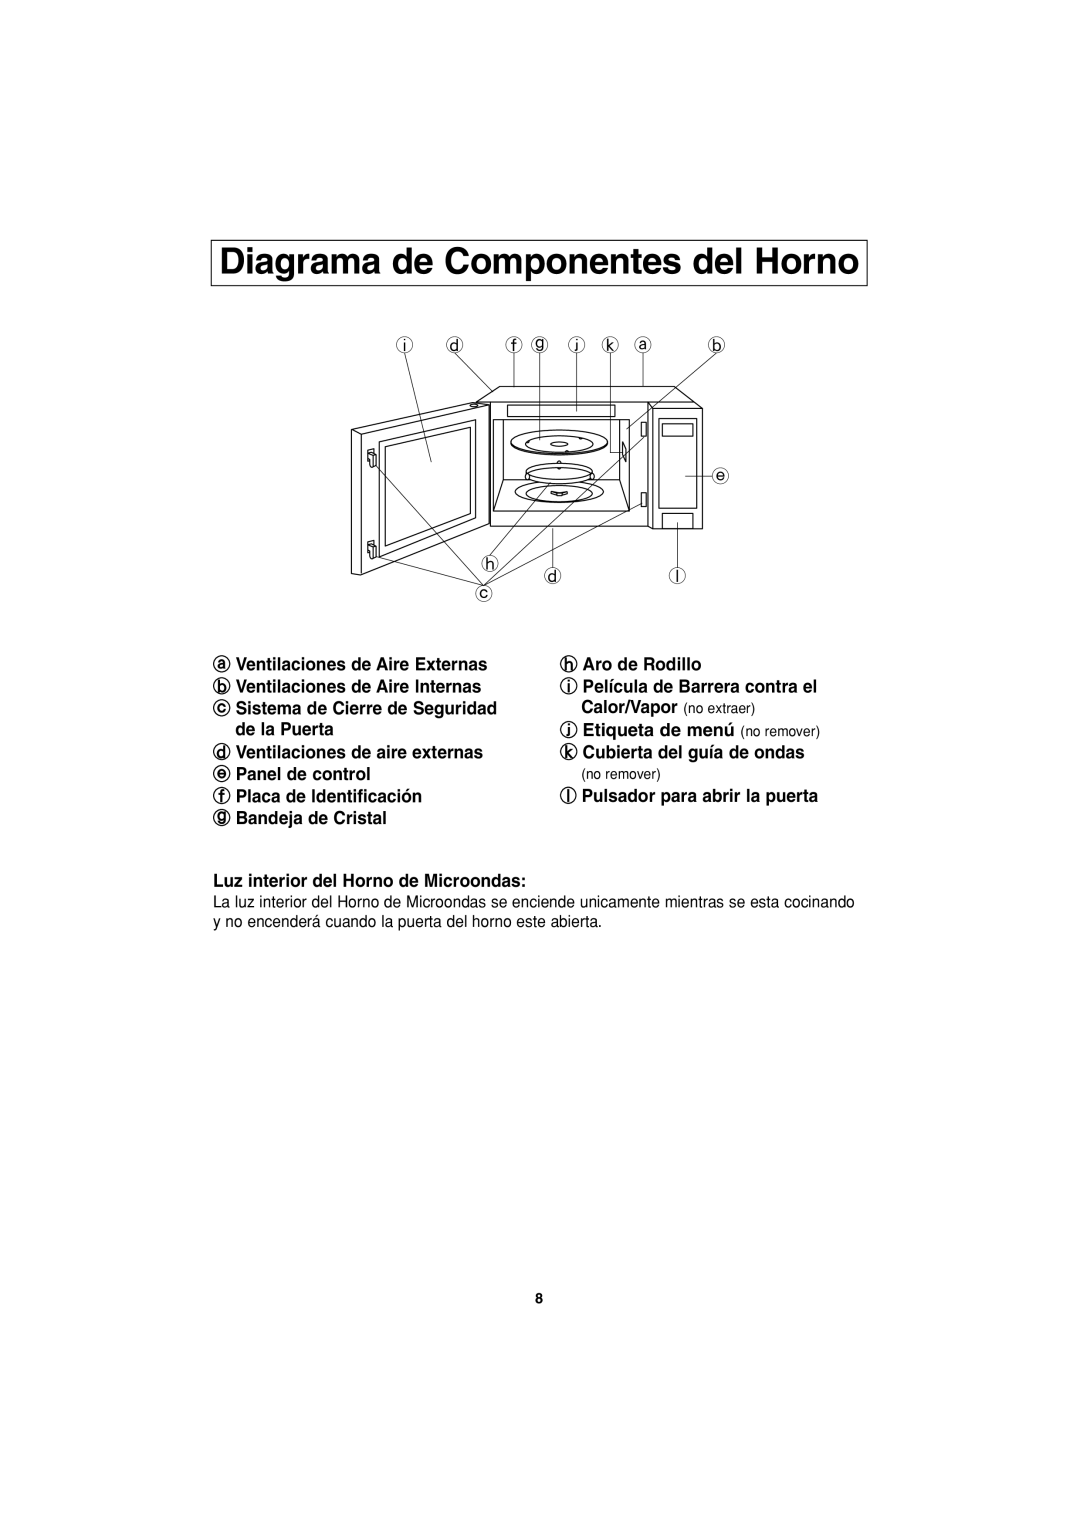 Panasonic NN-S443 important safety instructions Diagrama de Componentes del Horno 